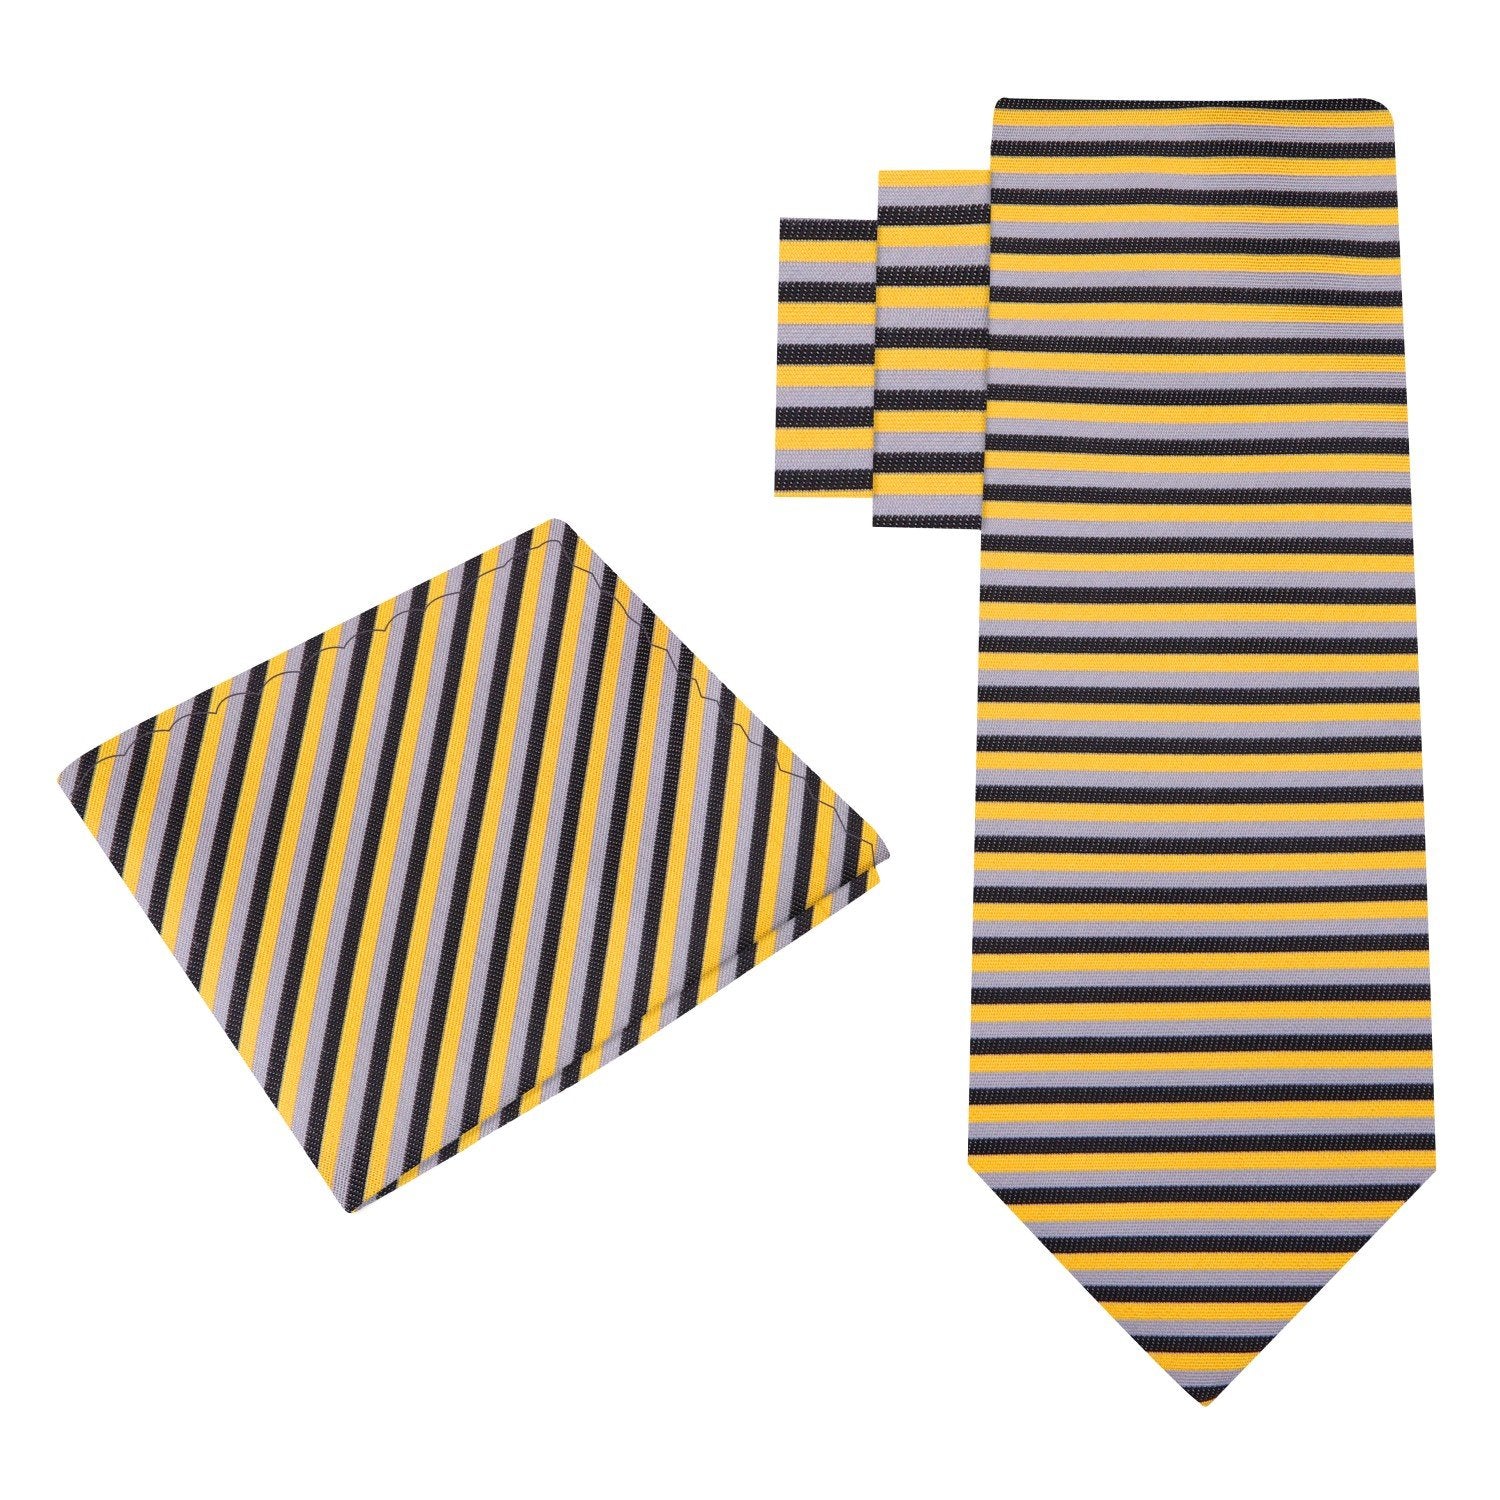 Alt view: Black, Gold Stripe Tie and Square